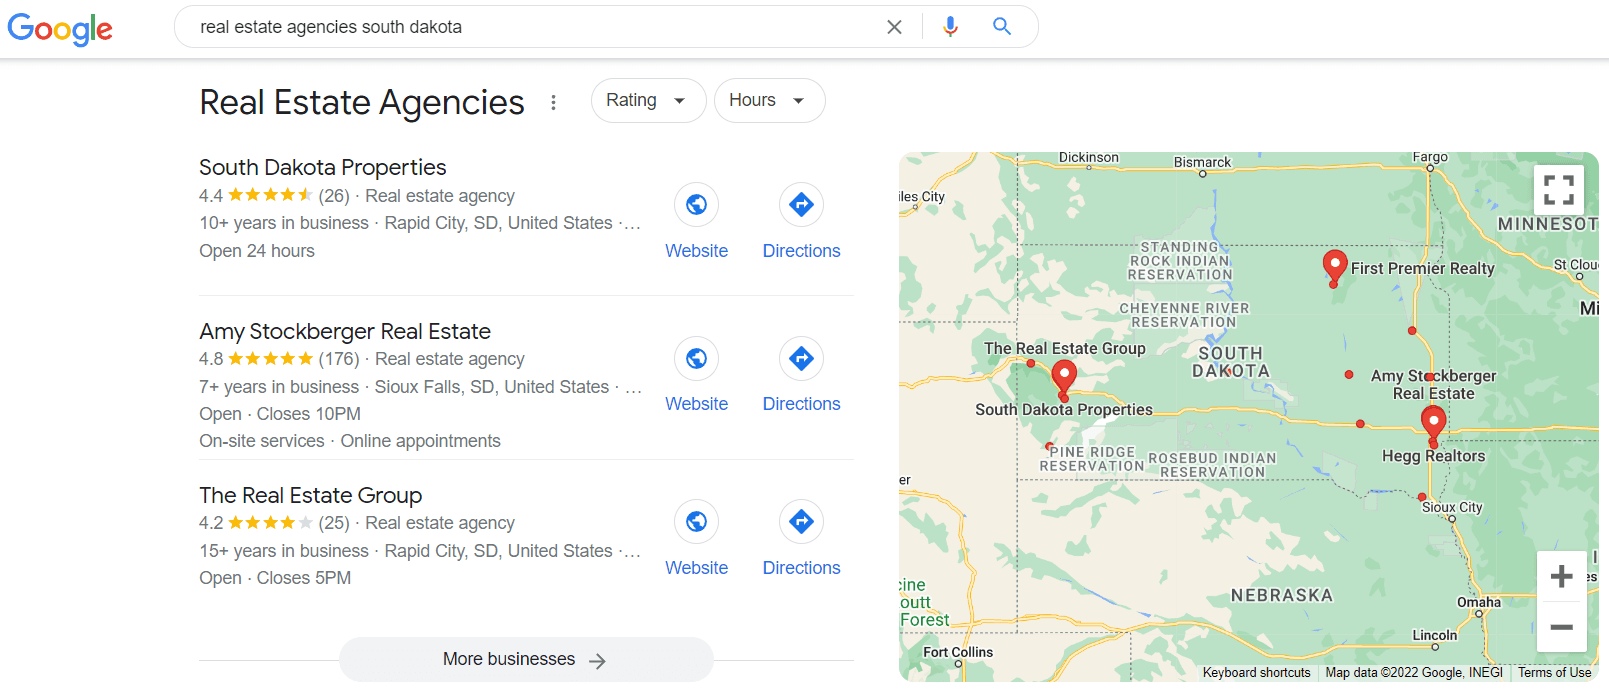 Real Estate Agencies South Dakota Google Search